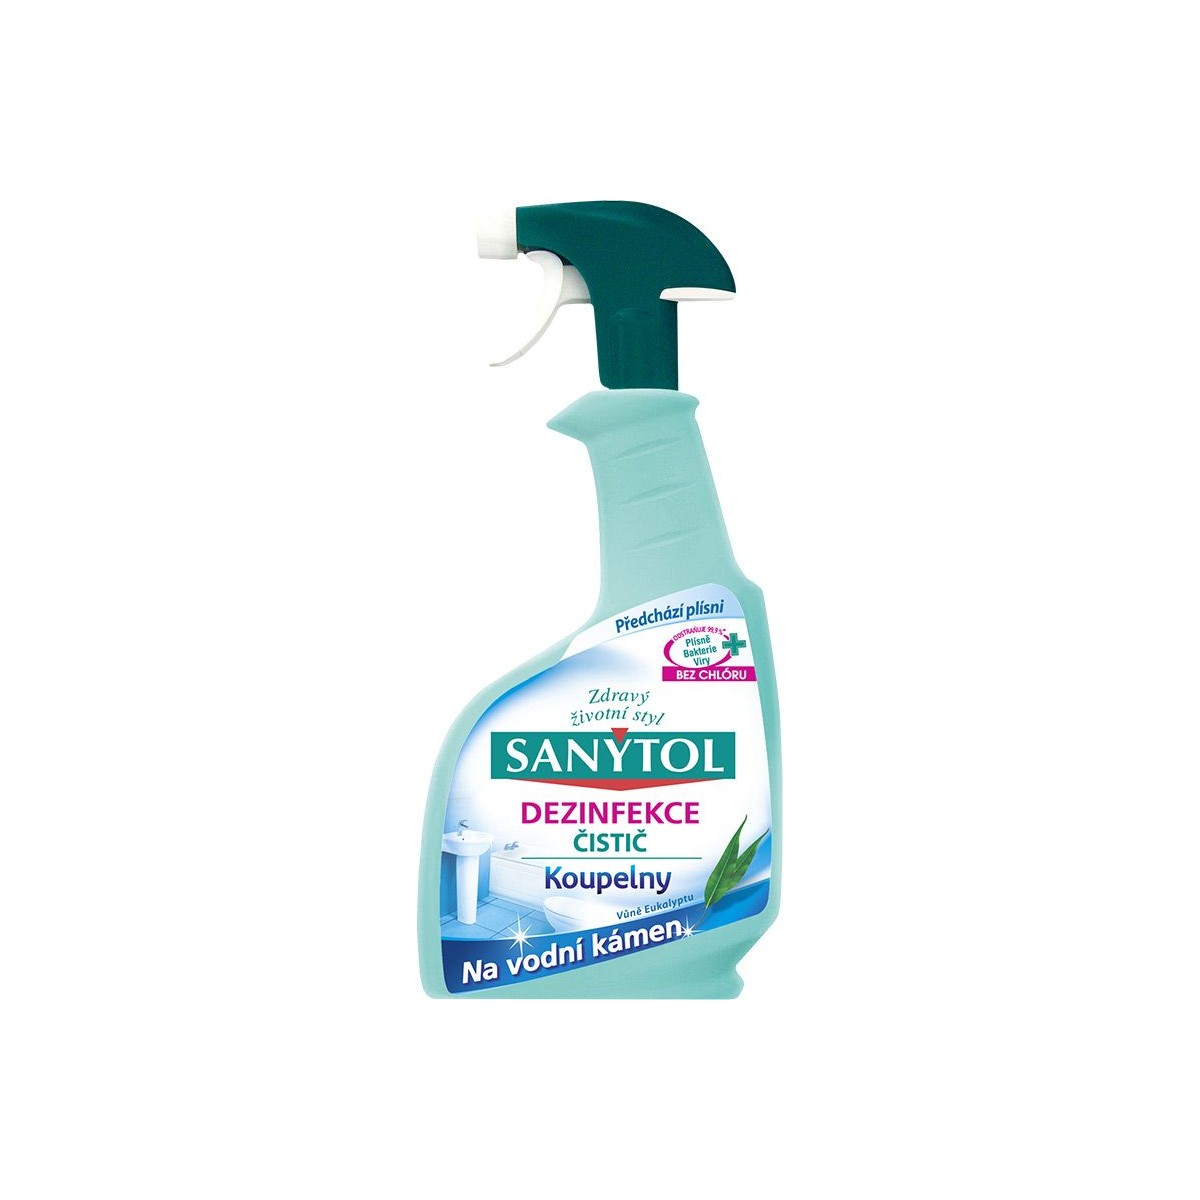 Sanytol dezinfekce koupelny 500ml